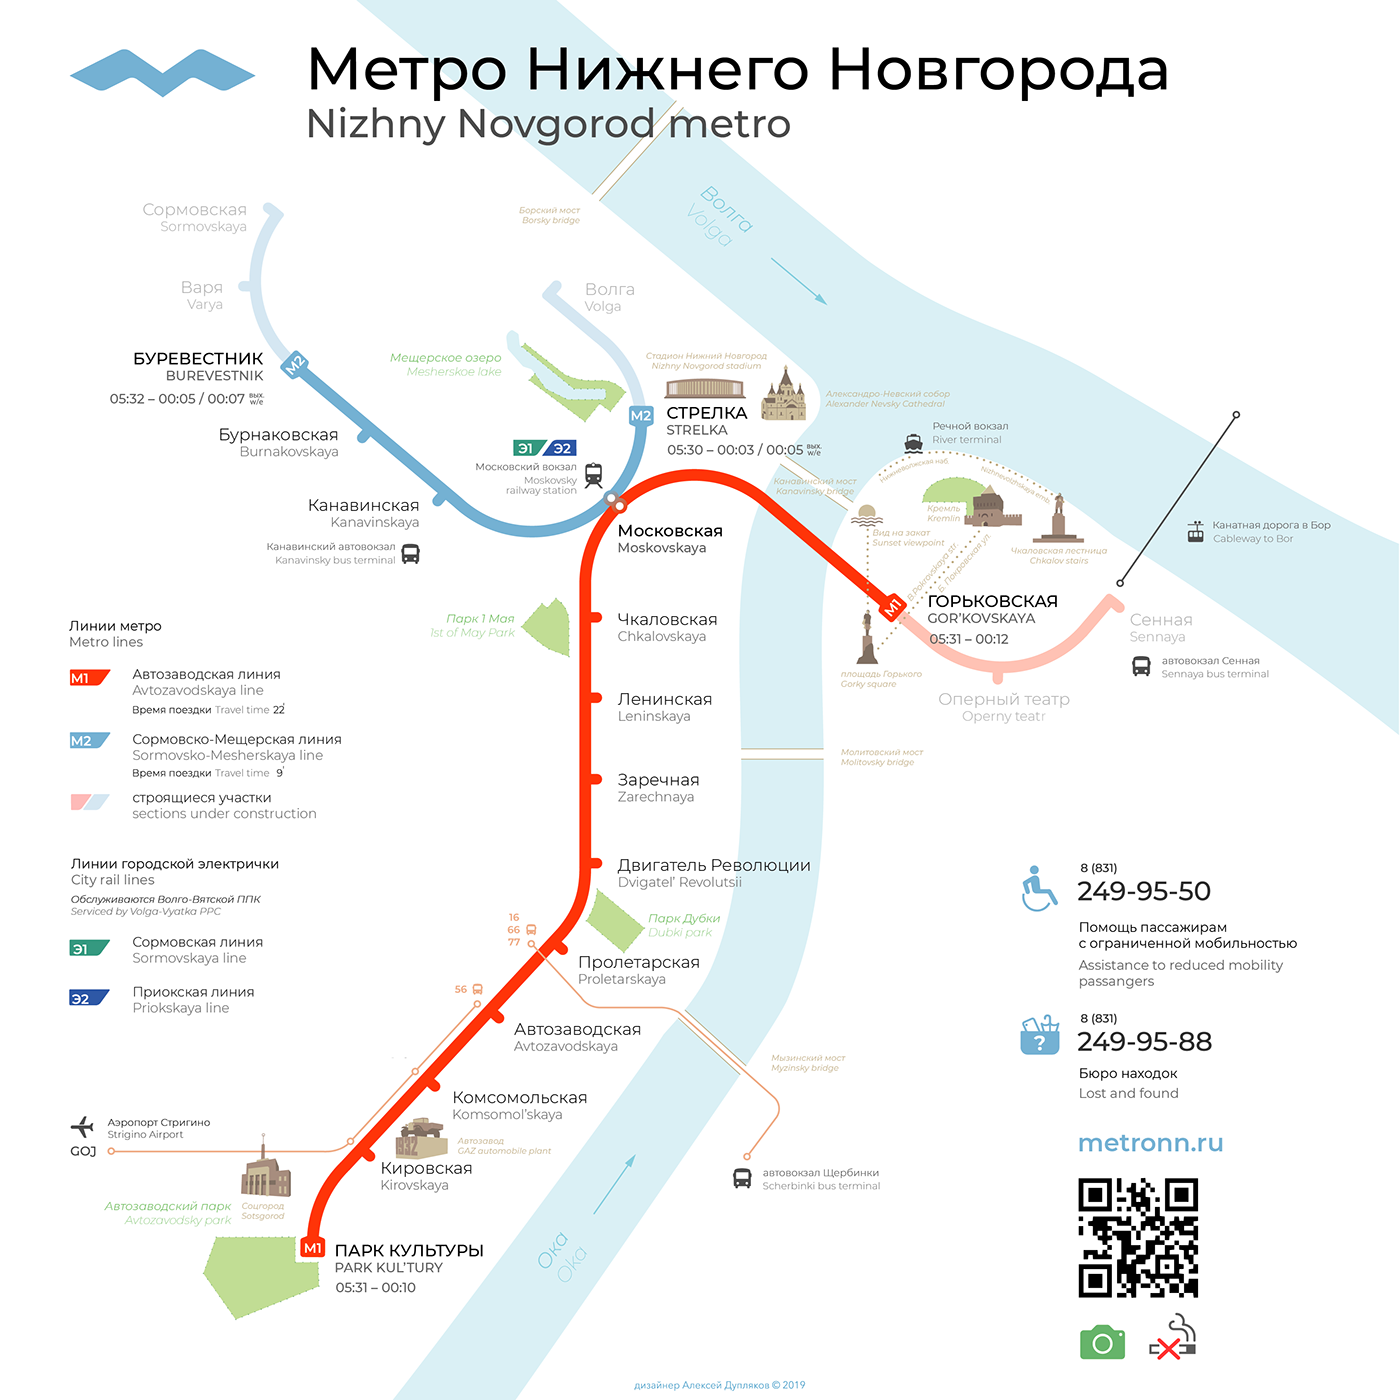 метро metro mapdesign metromap subway нижний новгород Nizhny Novgorod navigation навигация NavigationDesign